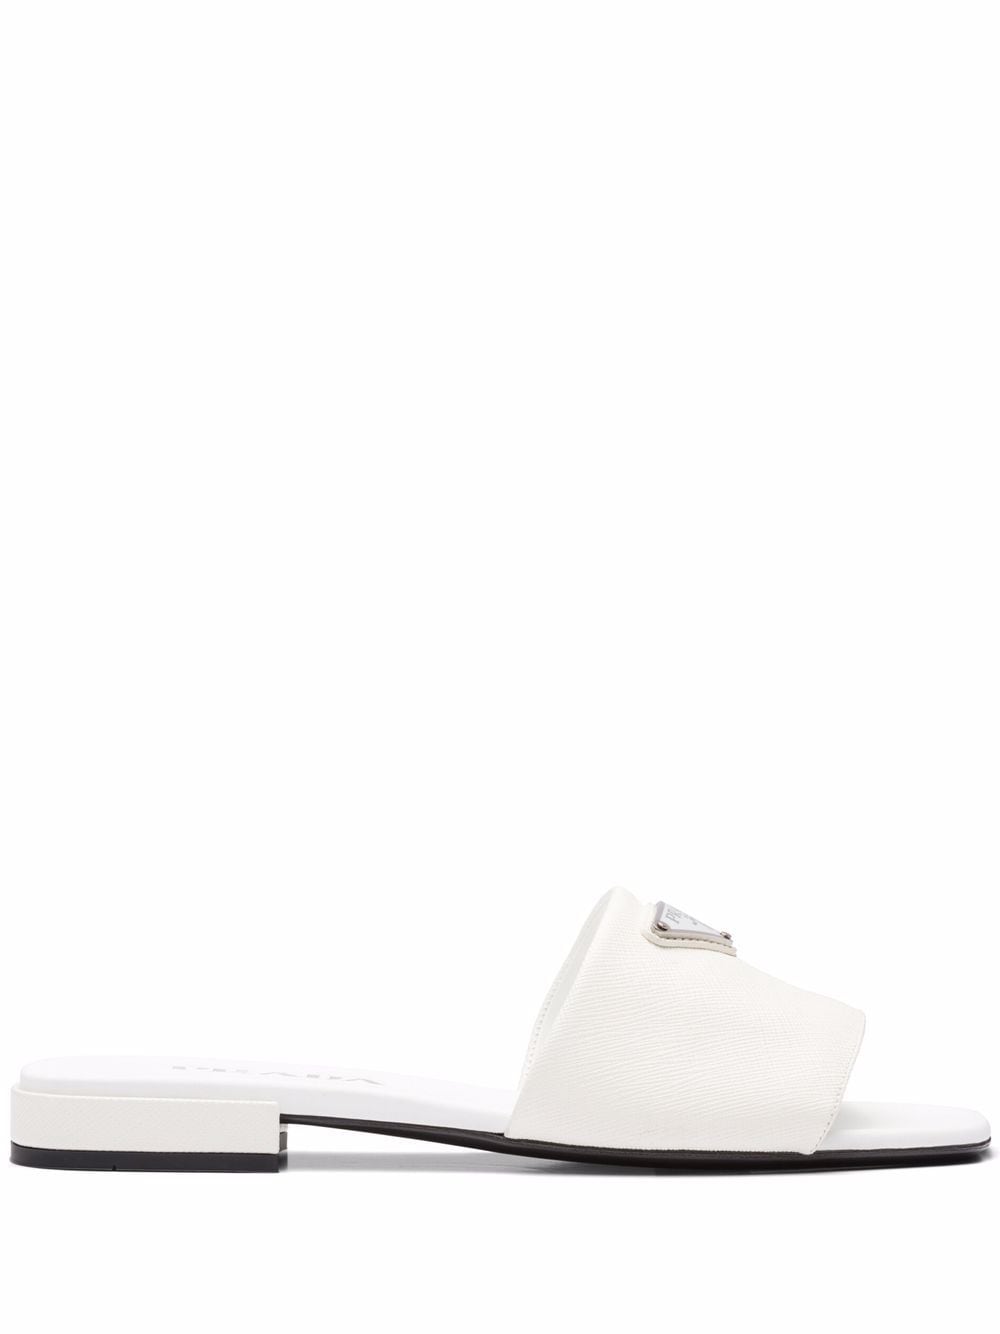 Prada logo flat sandals - White